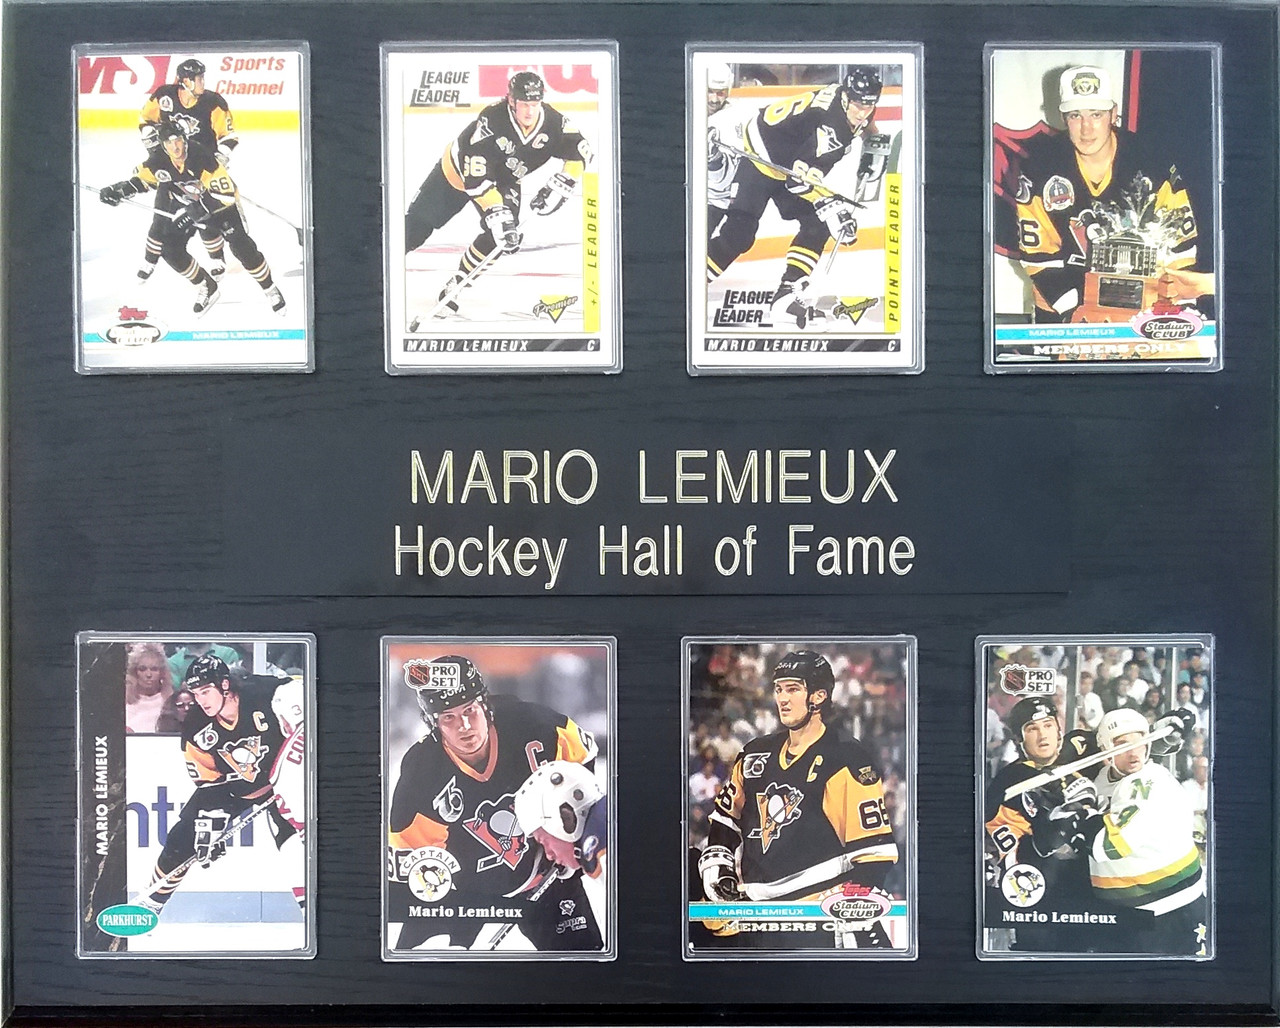 Pittsburgh Penguins Mario Lemieux Sports Illustrated Cover Poster by  Sports Illustrated - Sports Illustrated Covers